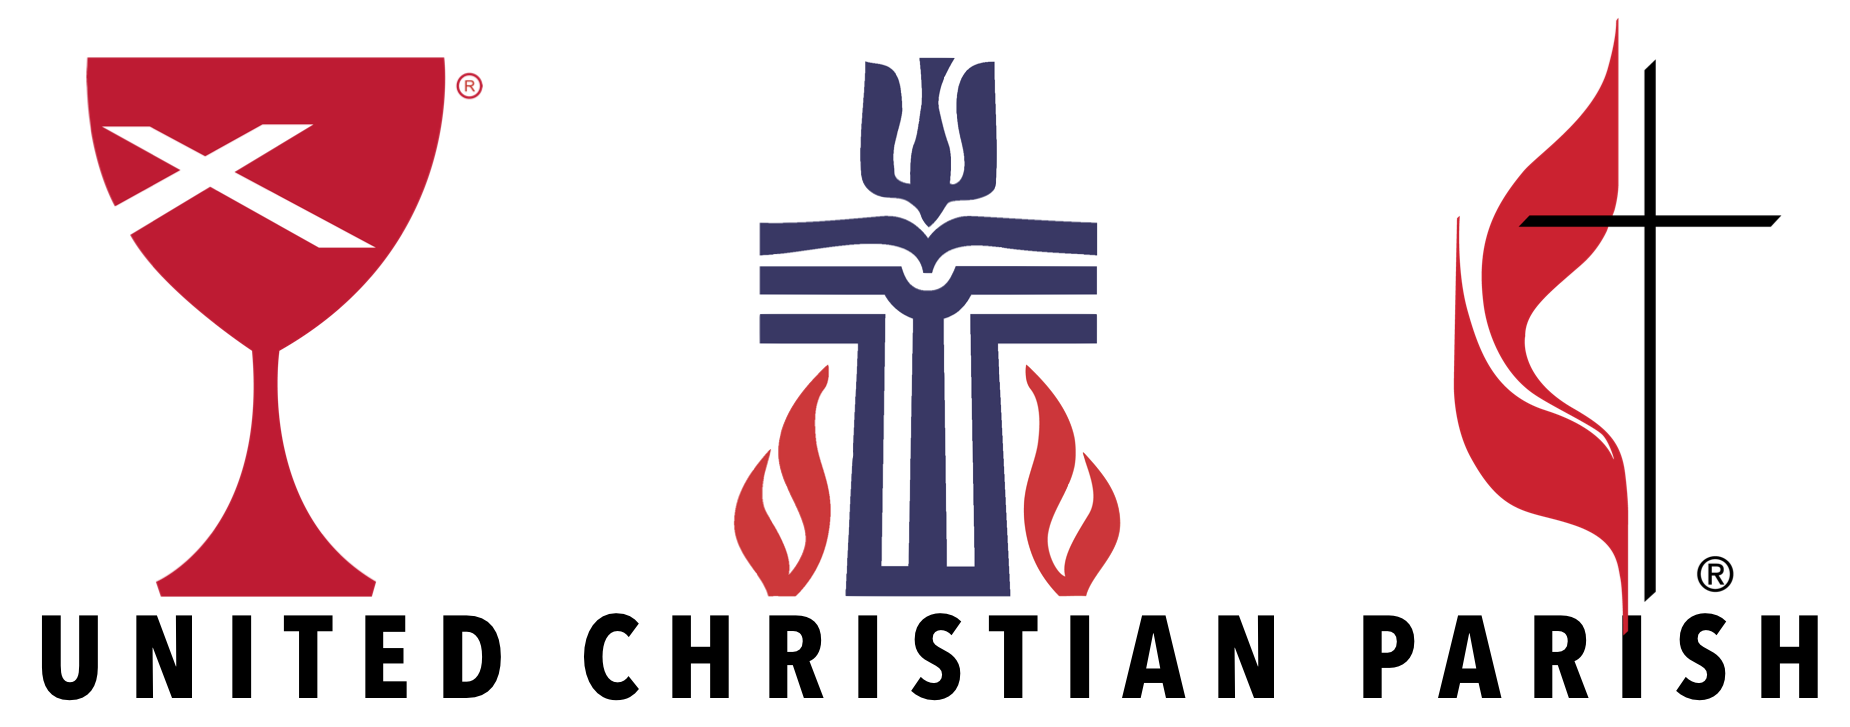 United Christian Parish